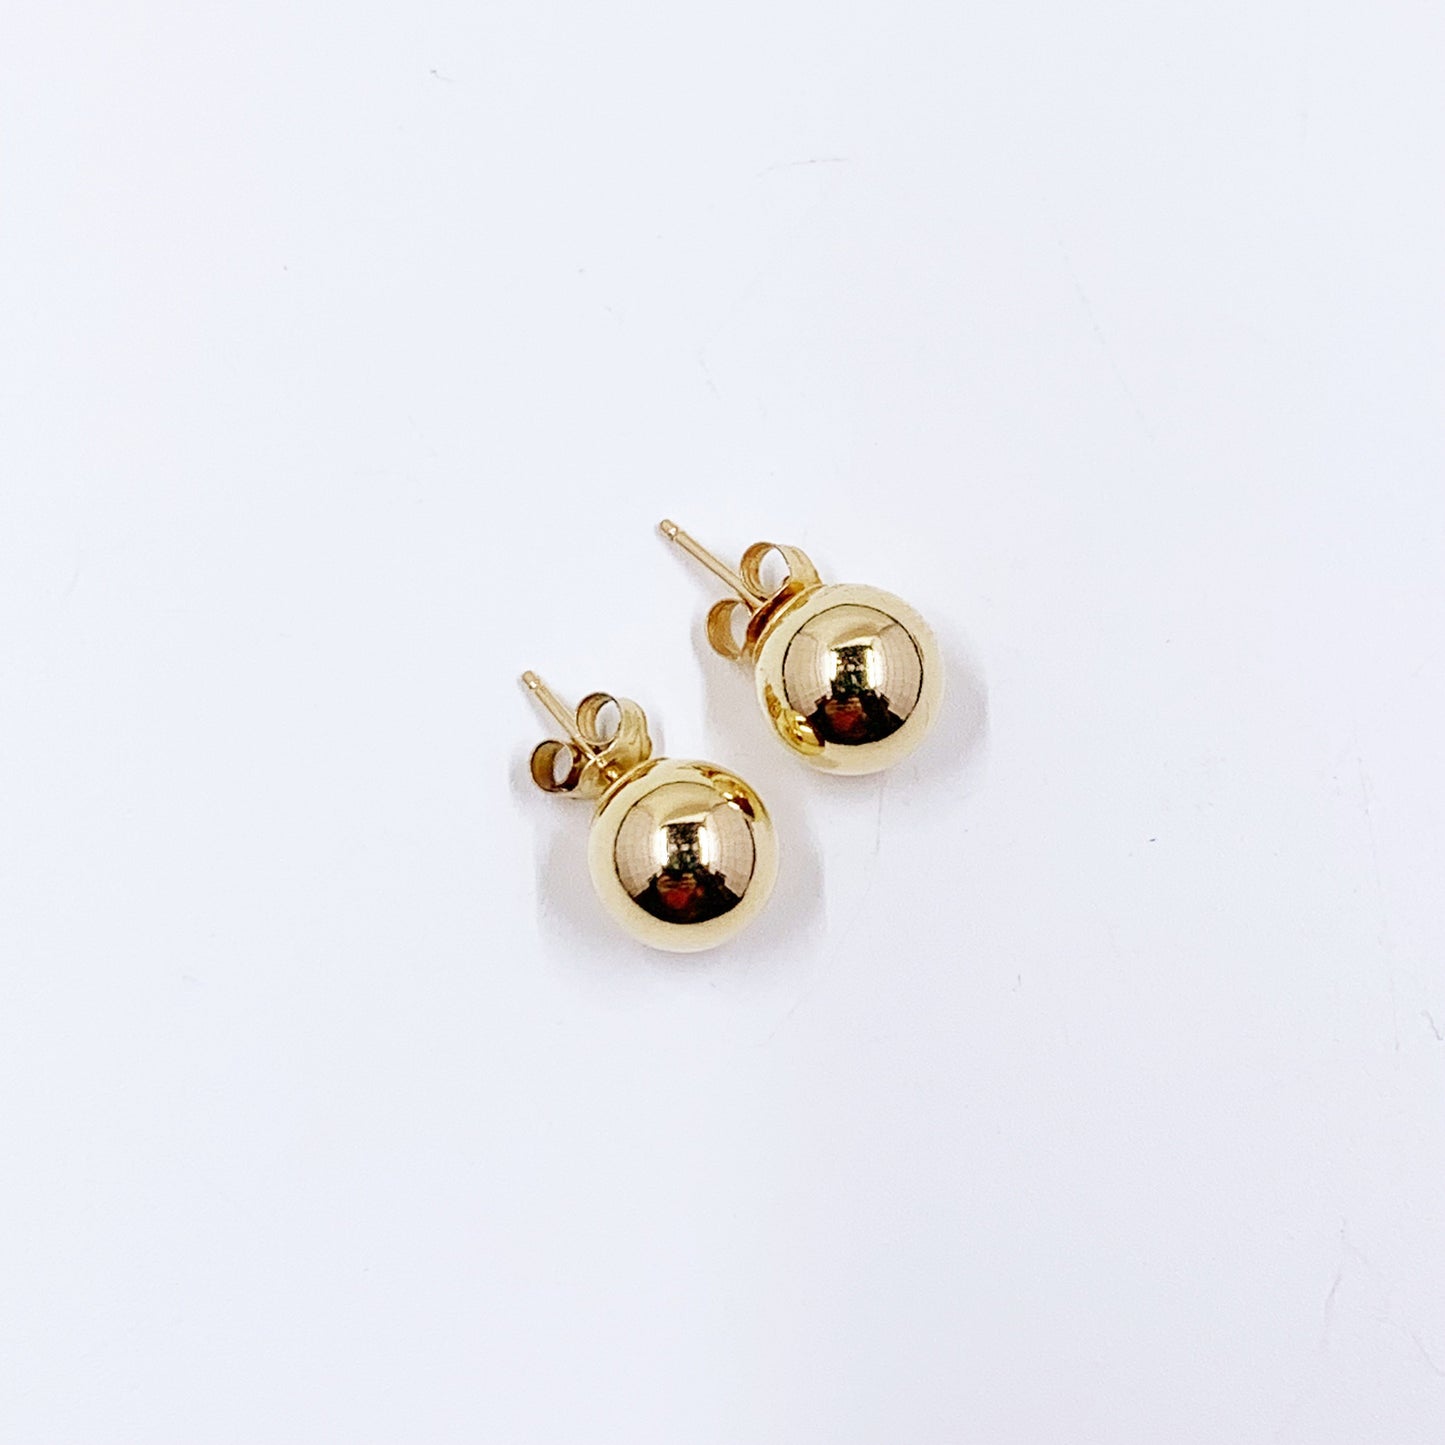 Vintage 14K Gold Ball Stud Earrings | 8.9 mm Gold Ball Stud Earrings